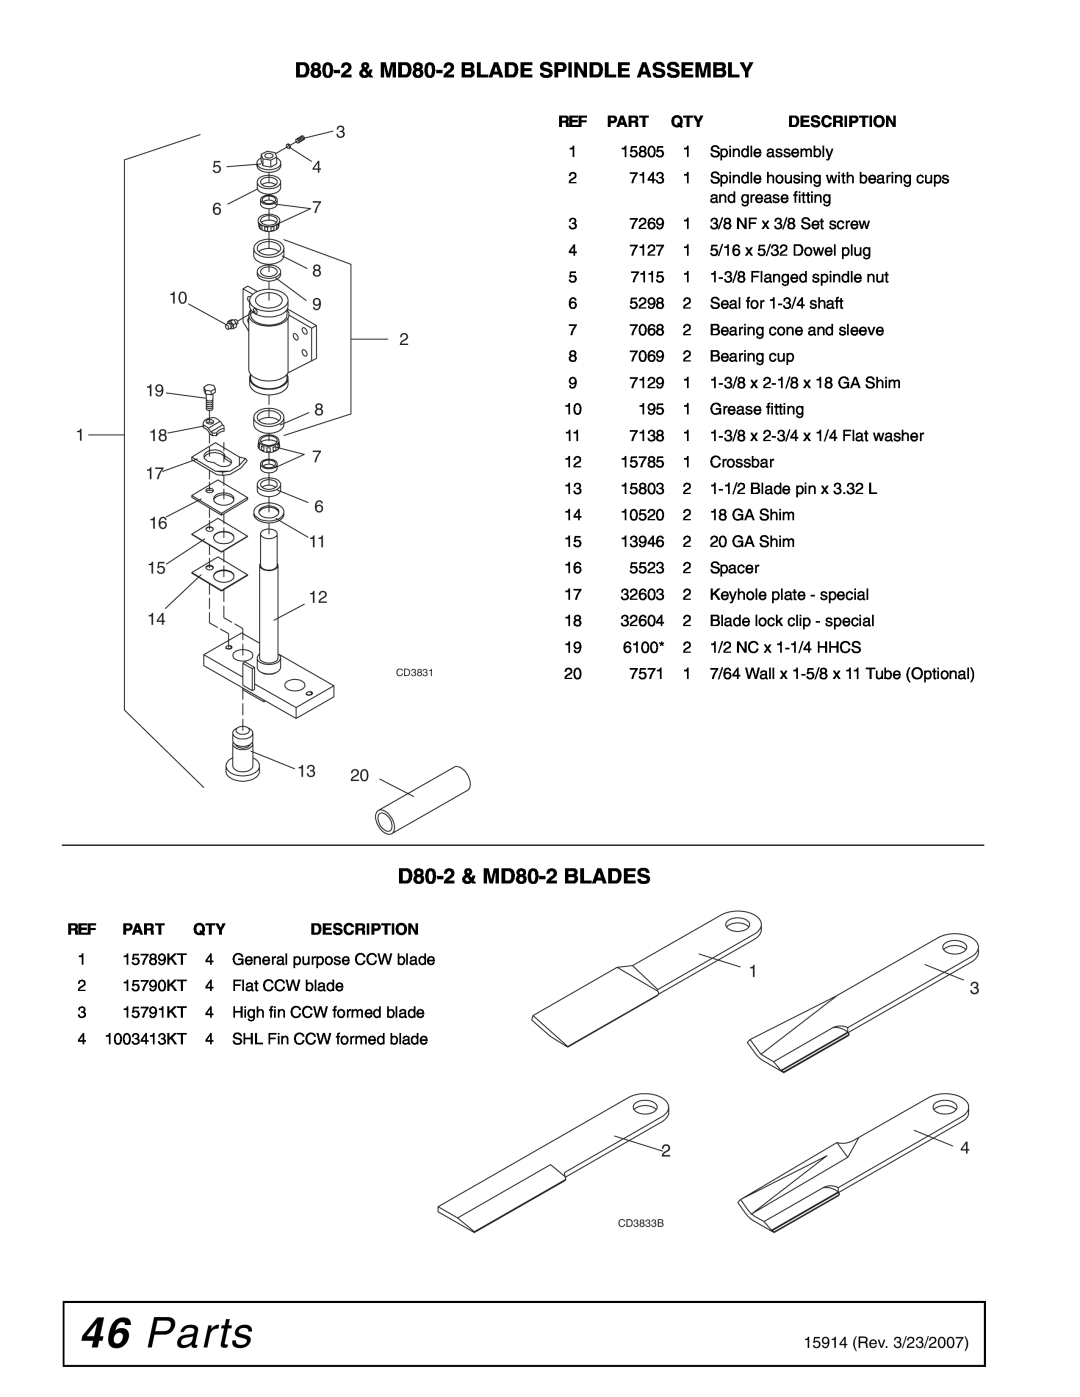 Woods Equipment manual Parts, D80-2& MD80-2BLADE SPINDLE ASSEMBLY, D80-2& MD80-2BLADES, Description 